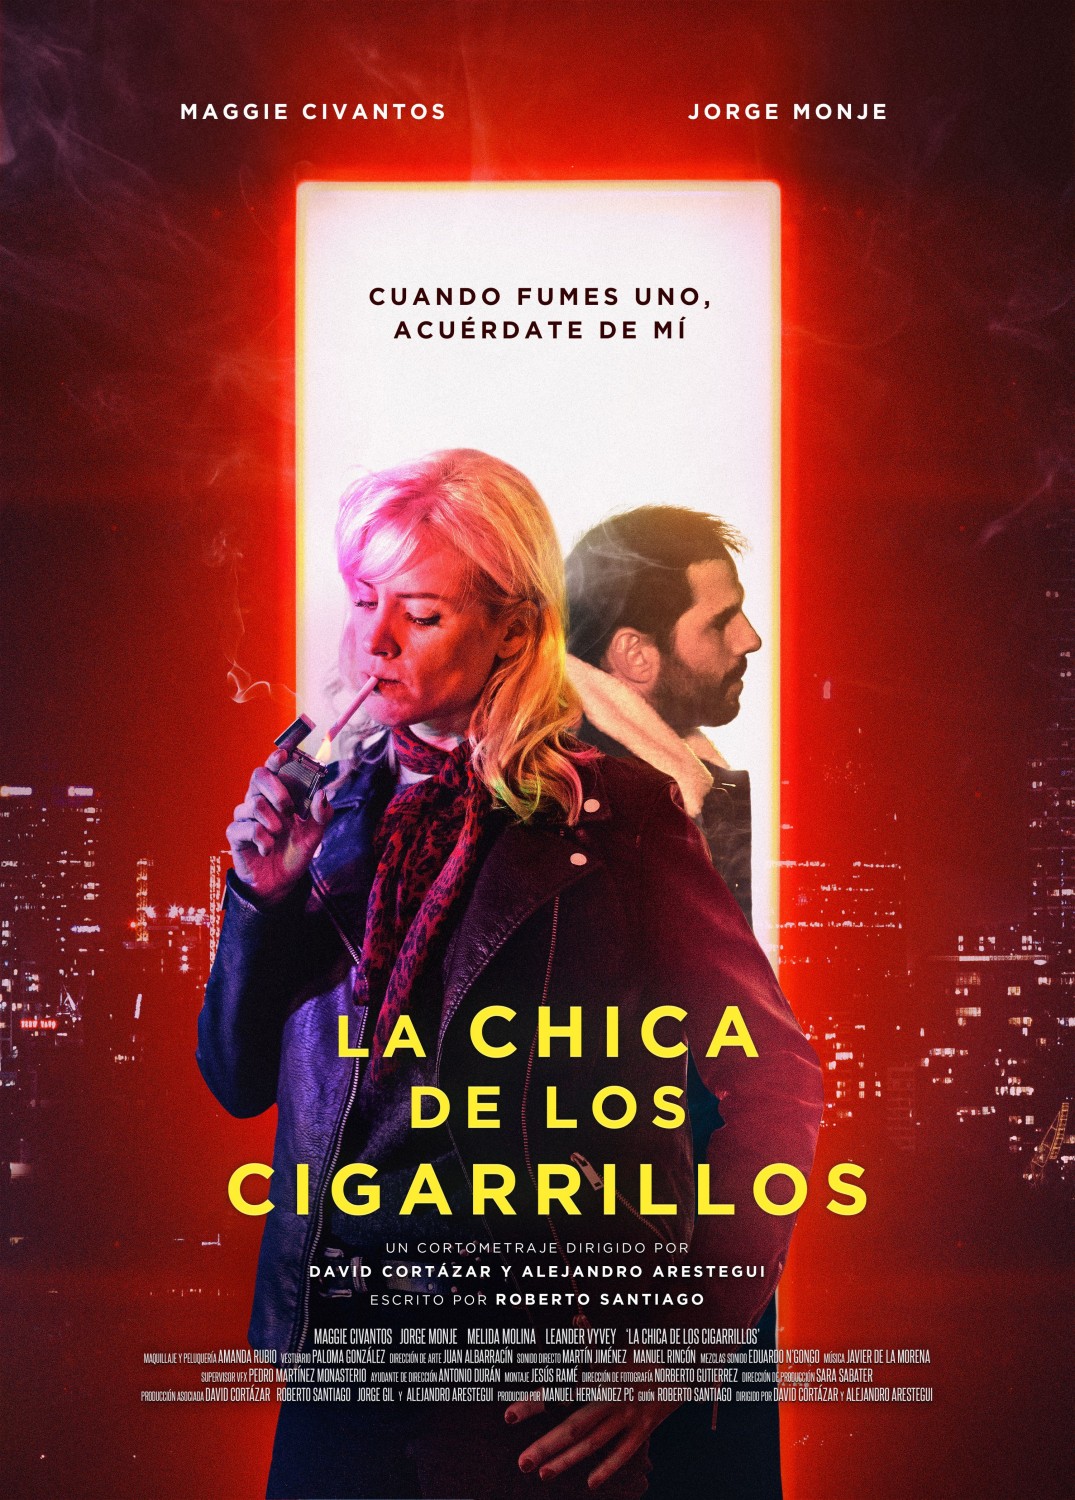 Extra Large Movie Poster Image for La chica de los cigarrillos